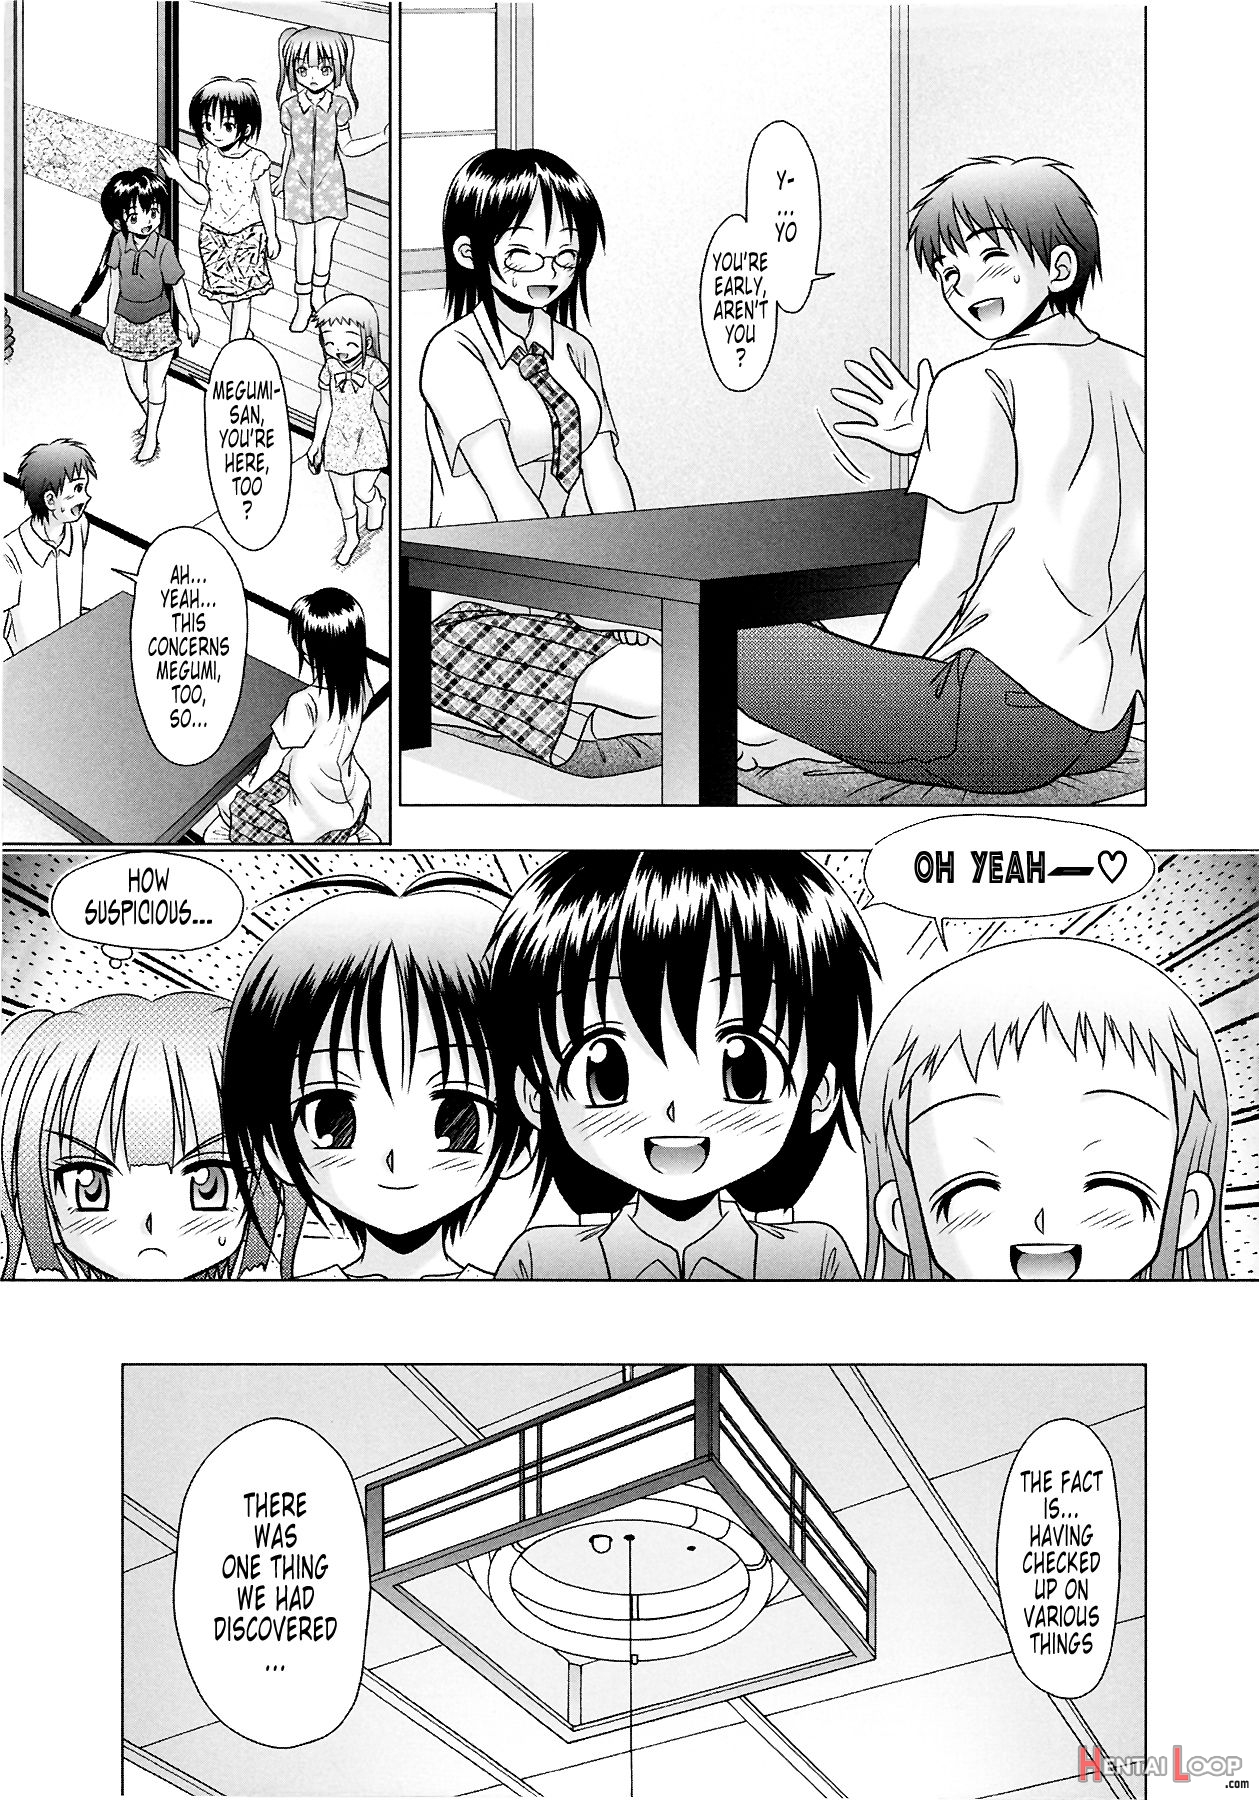 Tsukumimi 1&2 page 343